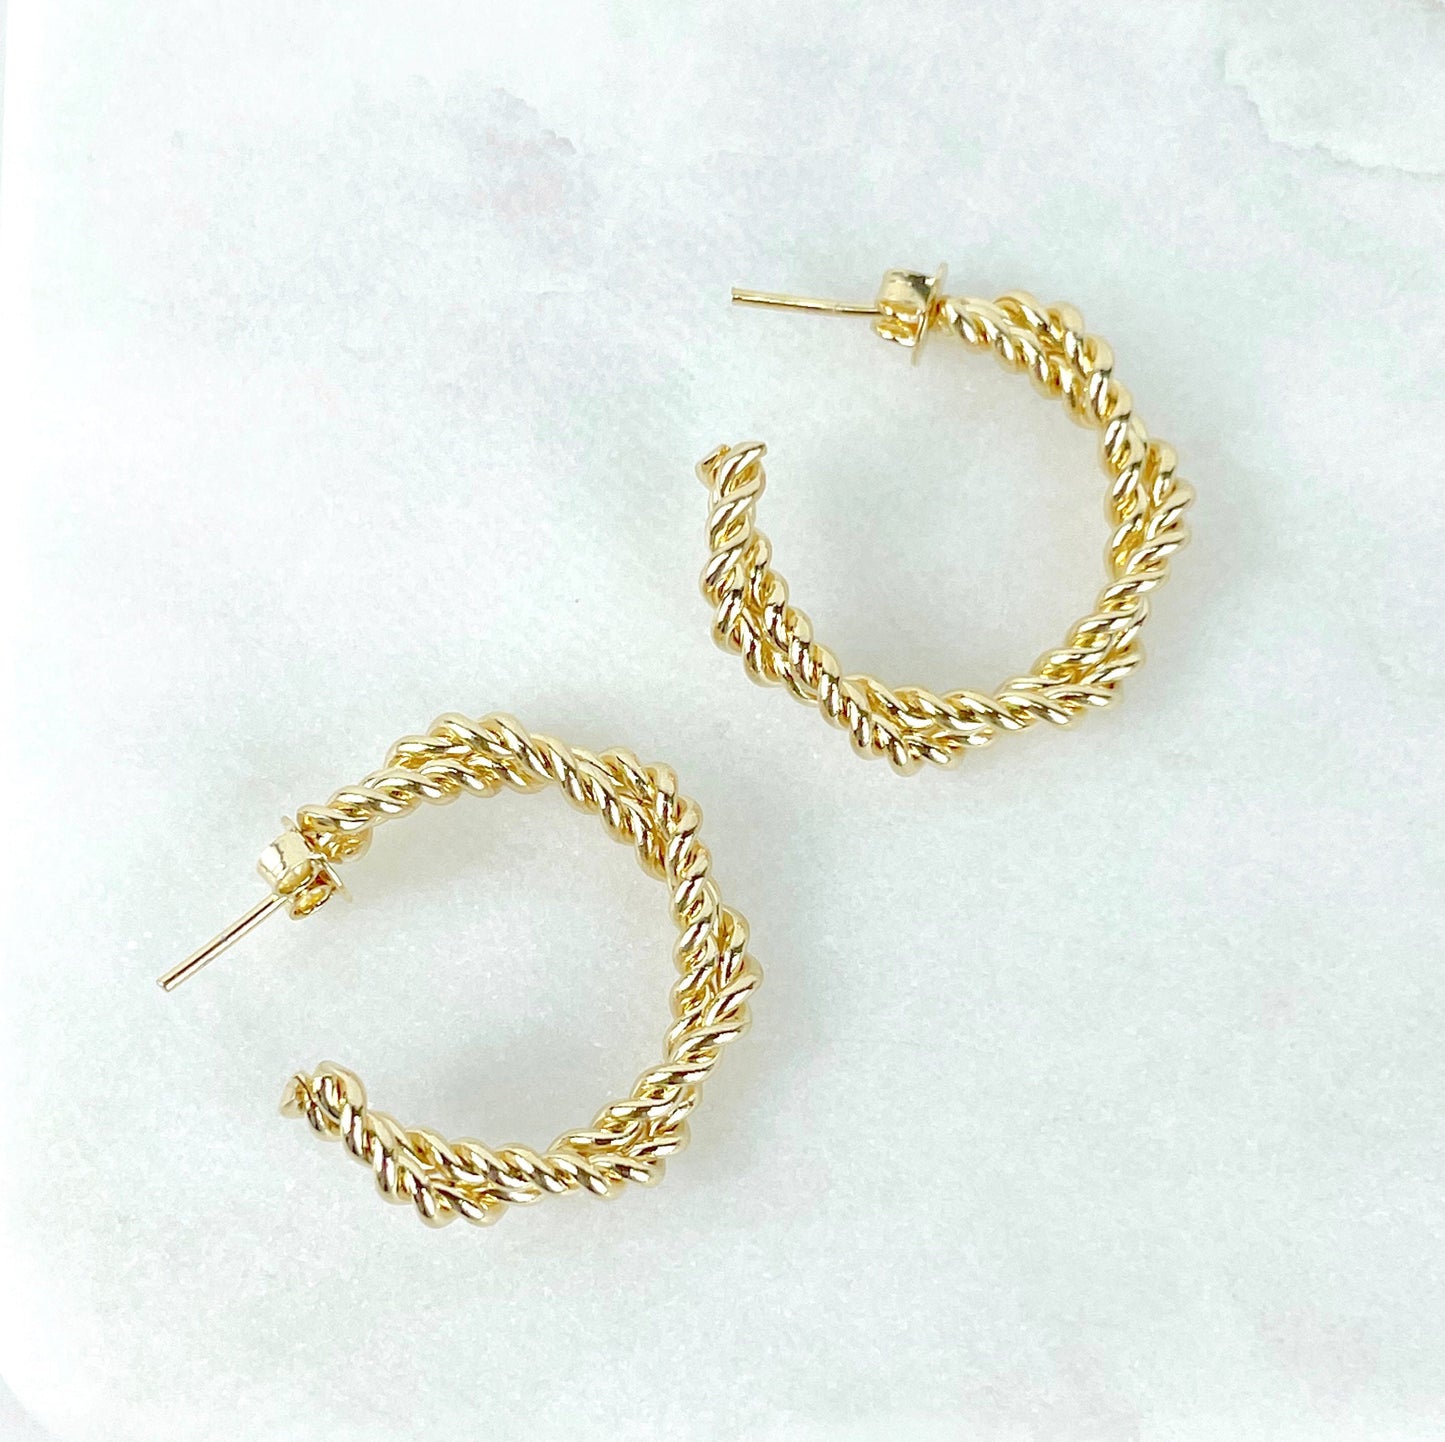 18k Gold Filled 25mm or 33mm Twisted Hoop Earrings, C-Hoop, Push Back Closure, Wholesale Jewelry Supplies